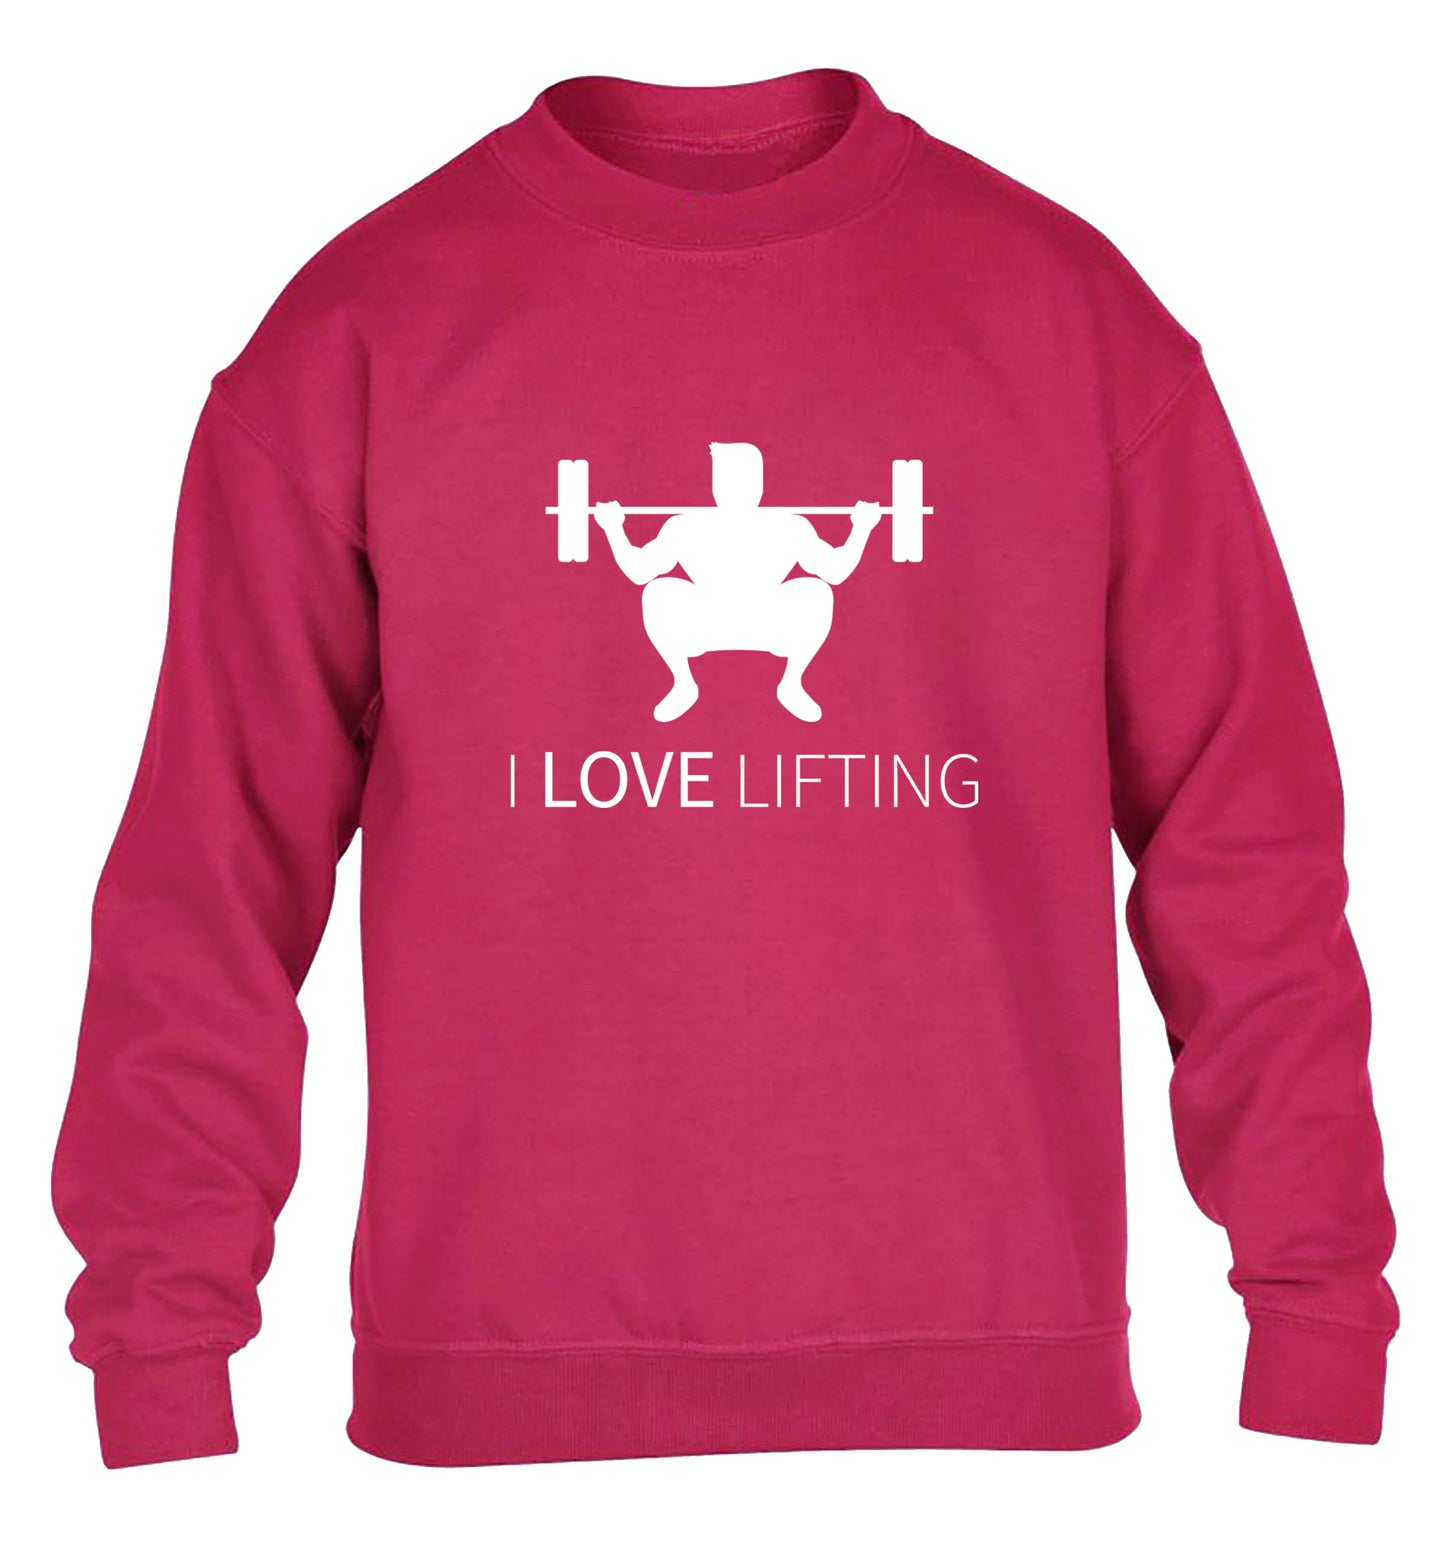 I Love Lifting children's pink sweater 12-13 Years